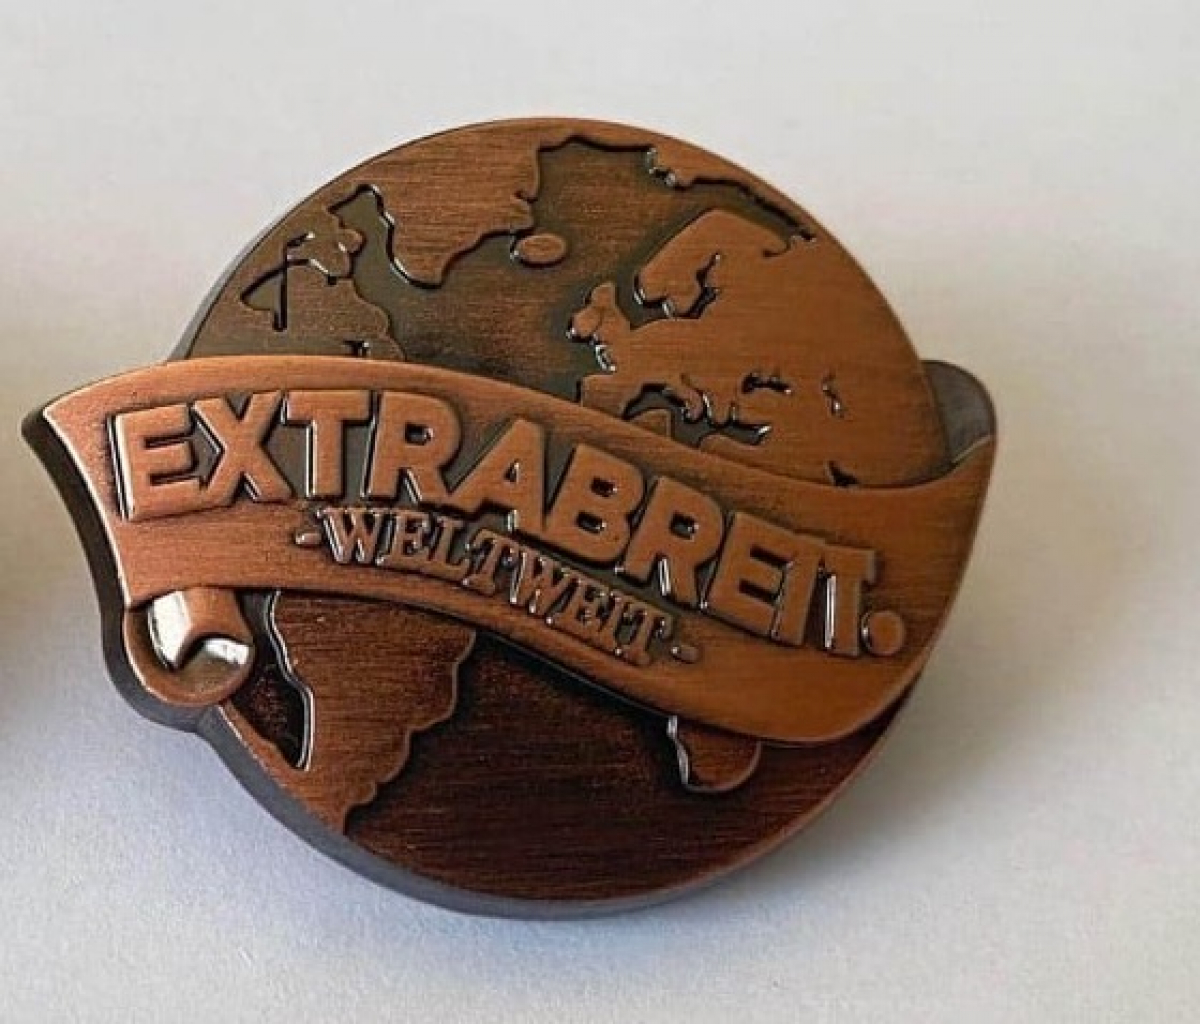 EXTRABREIT – Weltweit – 3D Metal Pin – Kupfer